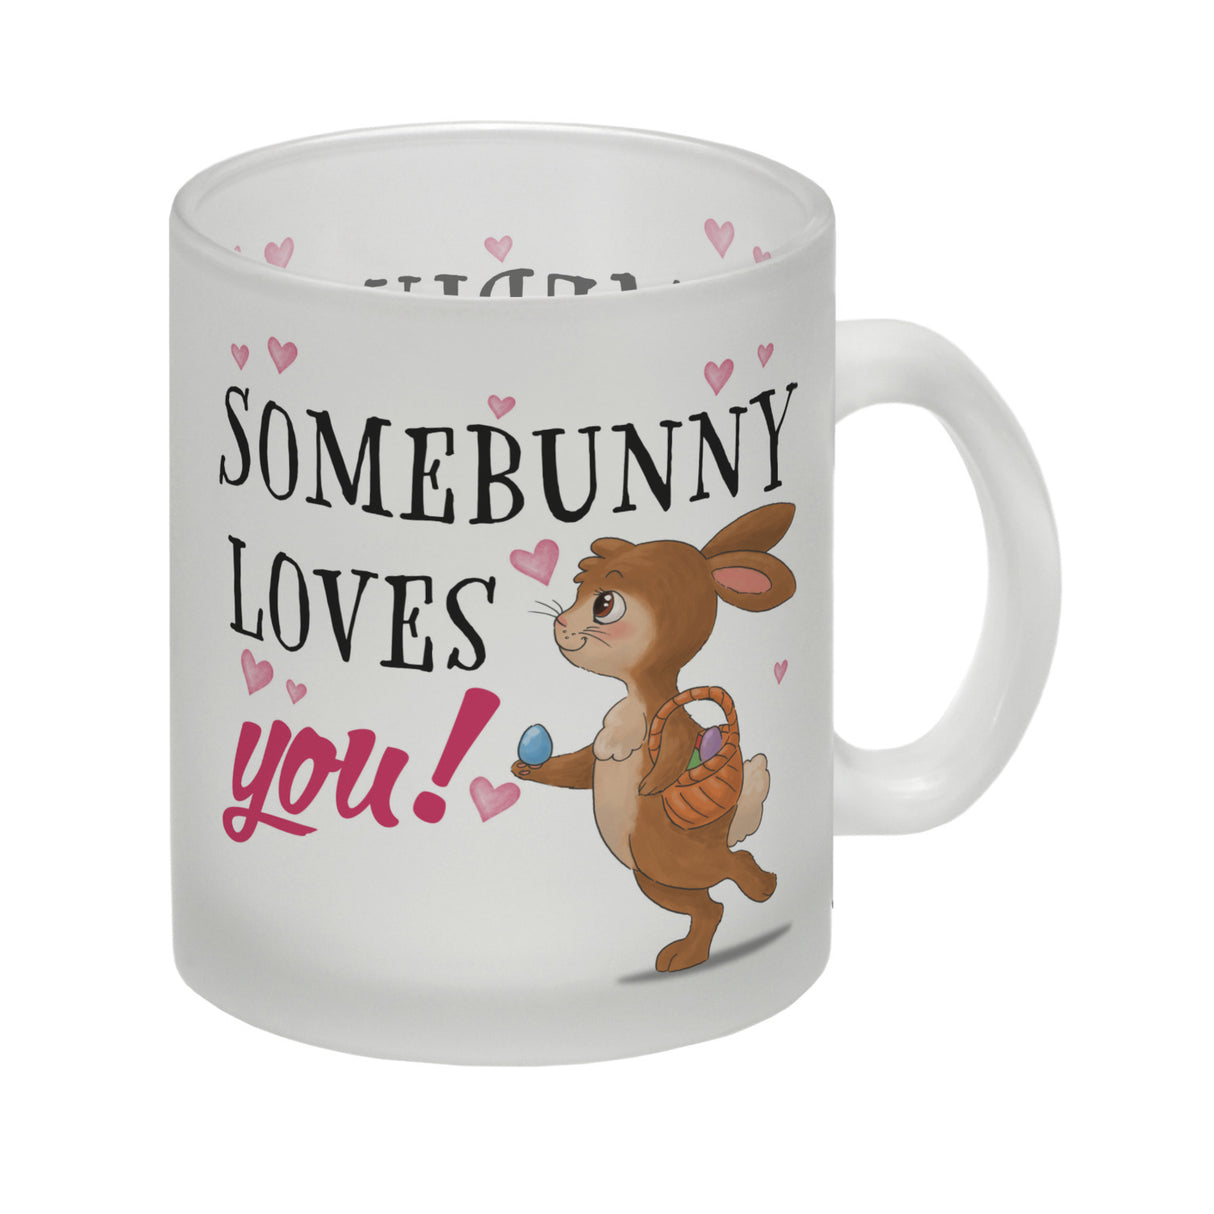 Somebunny loves you Kaffeebecher mit süßem Osterhasen